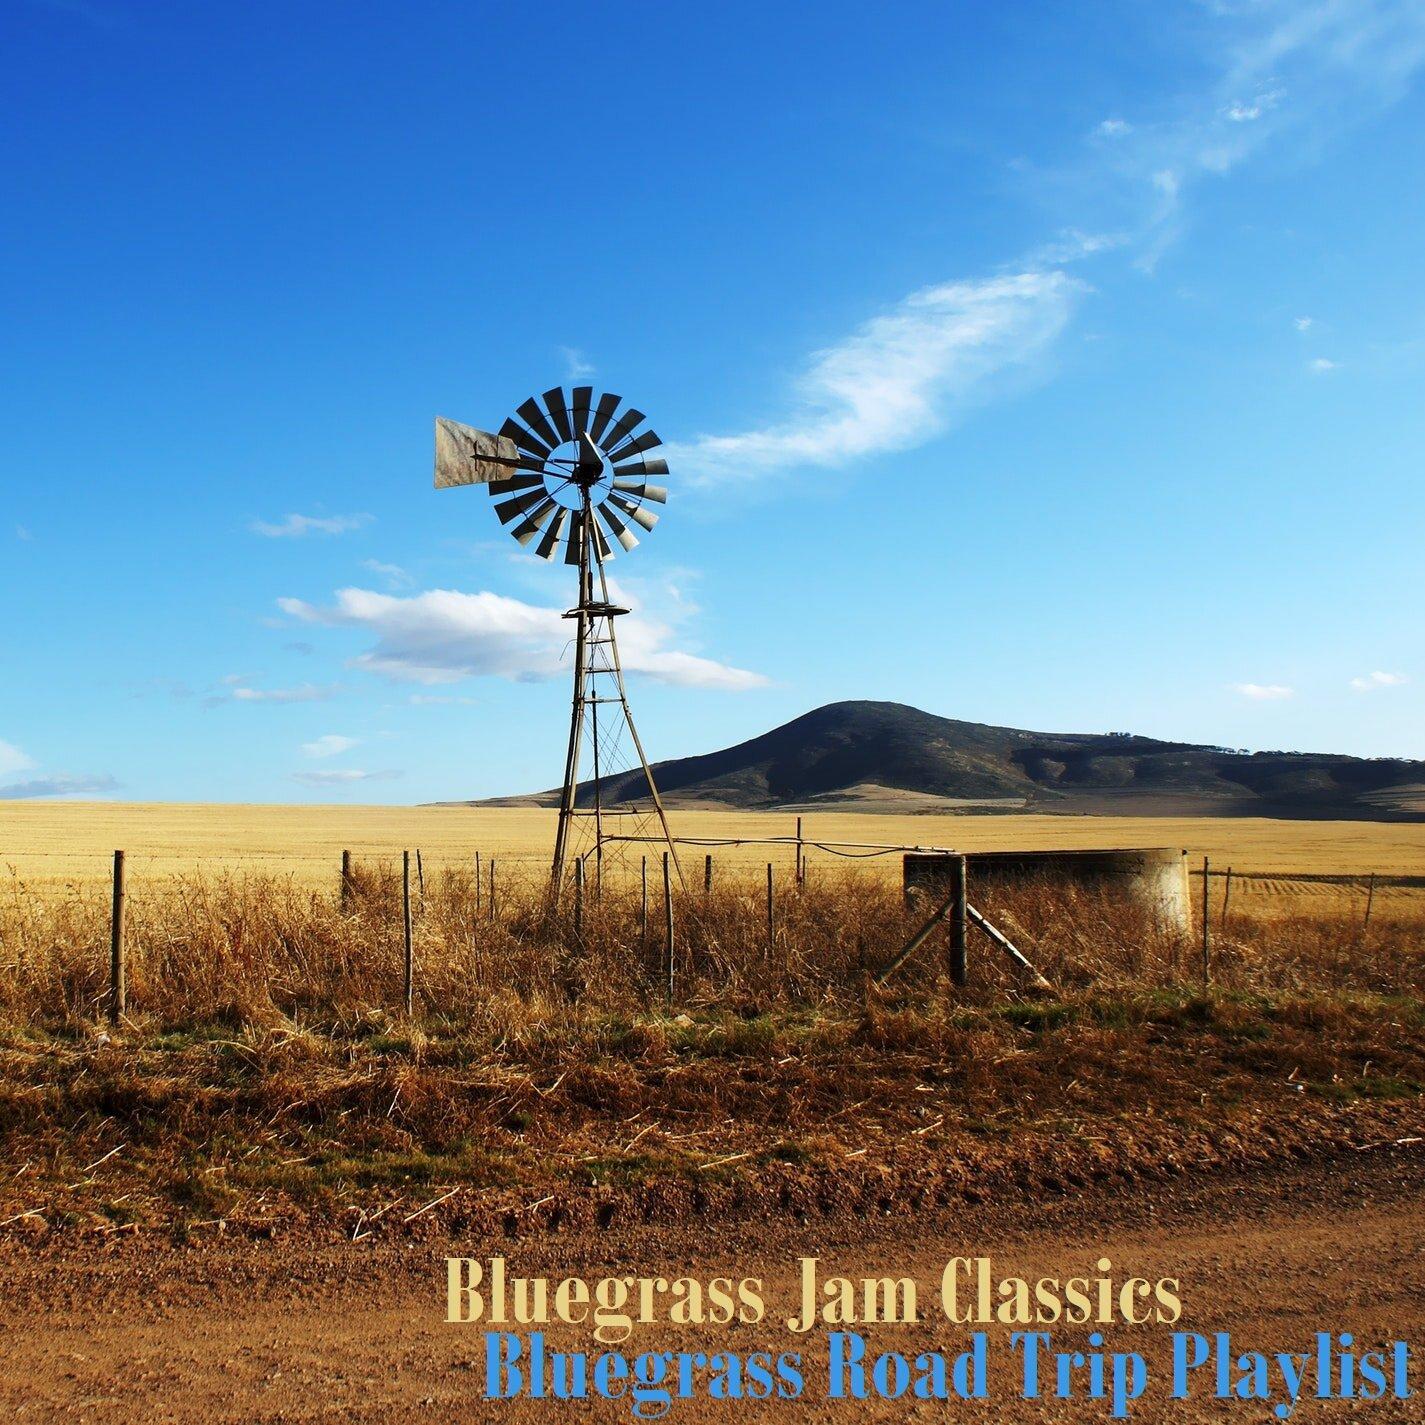 Bluegrass Road Trip Playlist